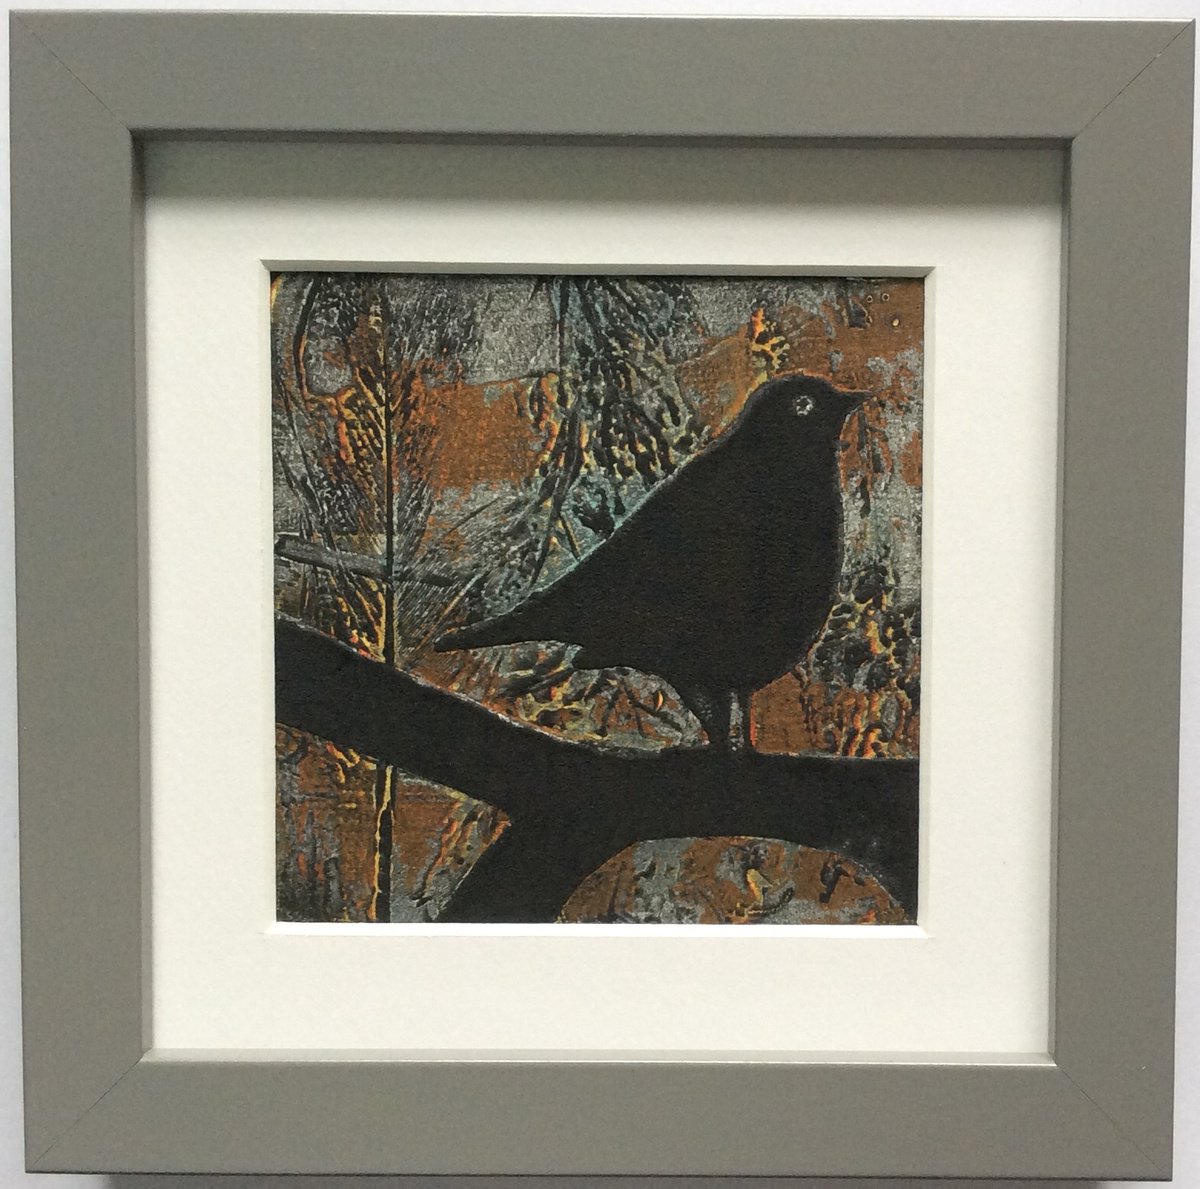 Blackbird by Jay Seabrook